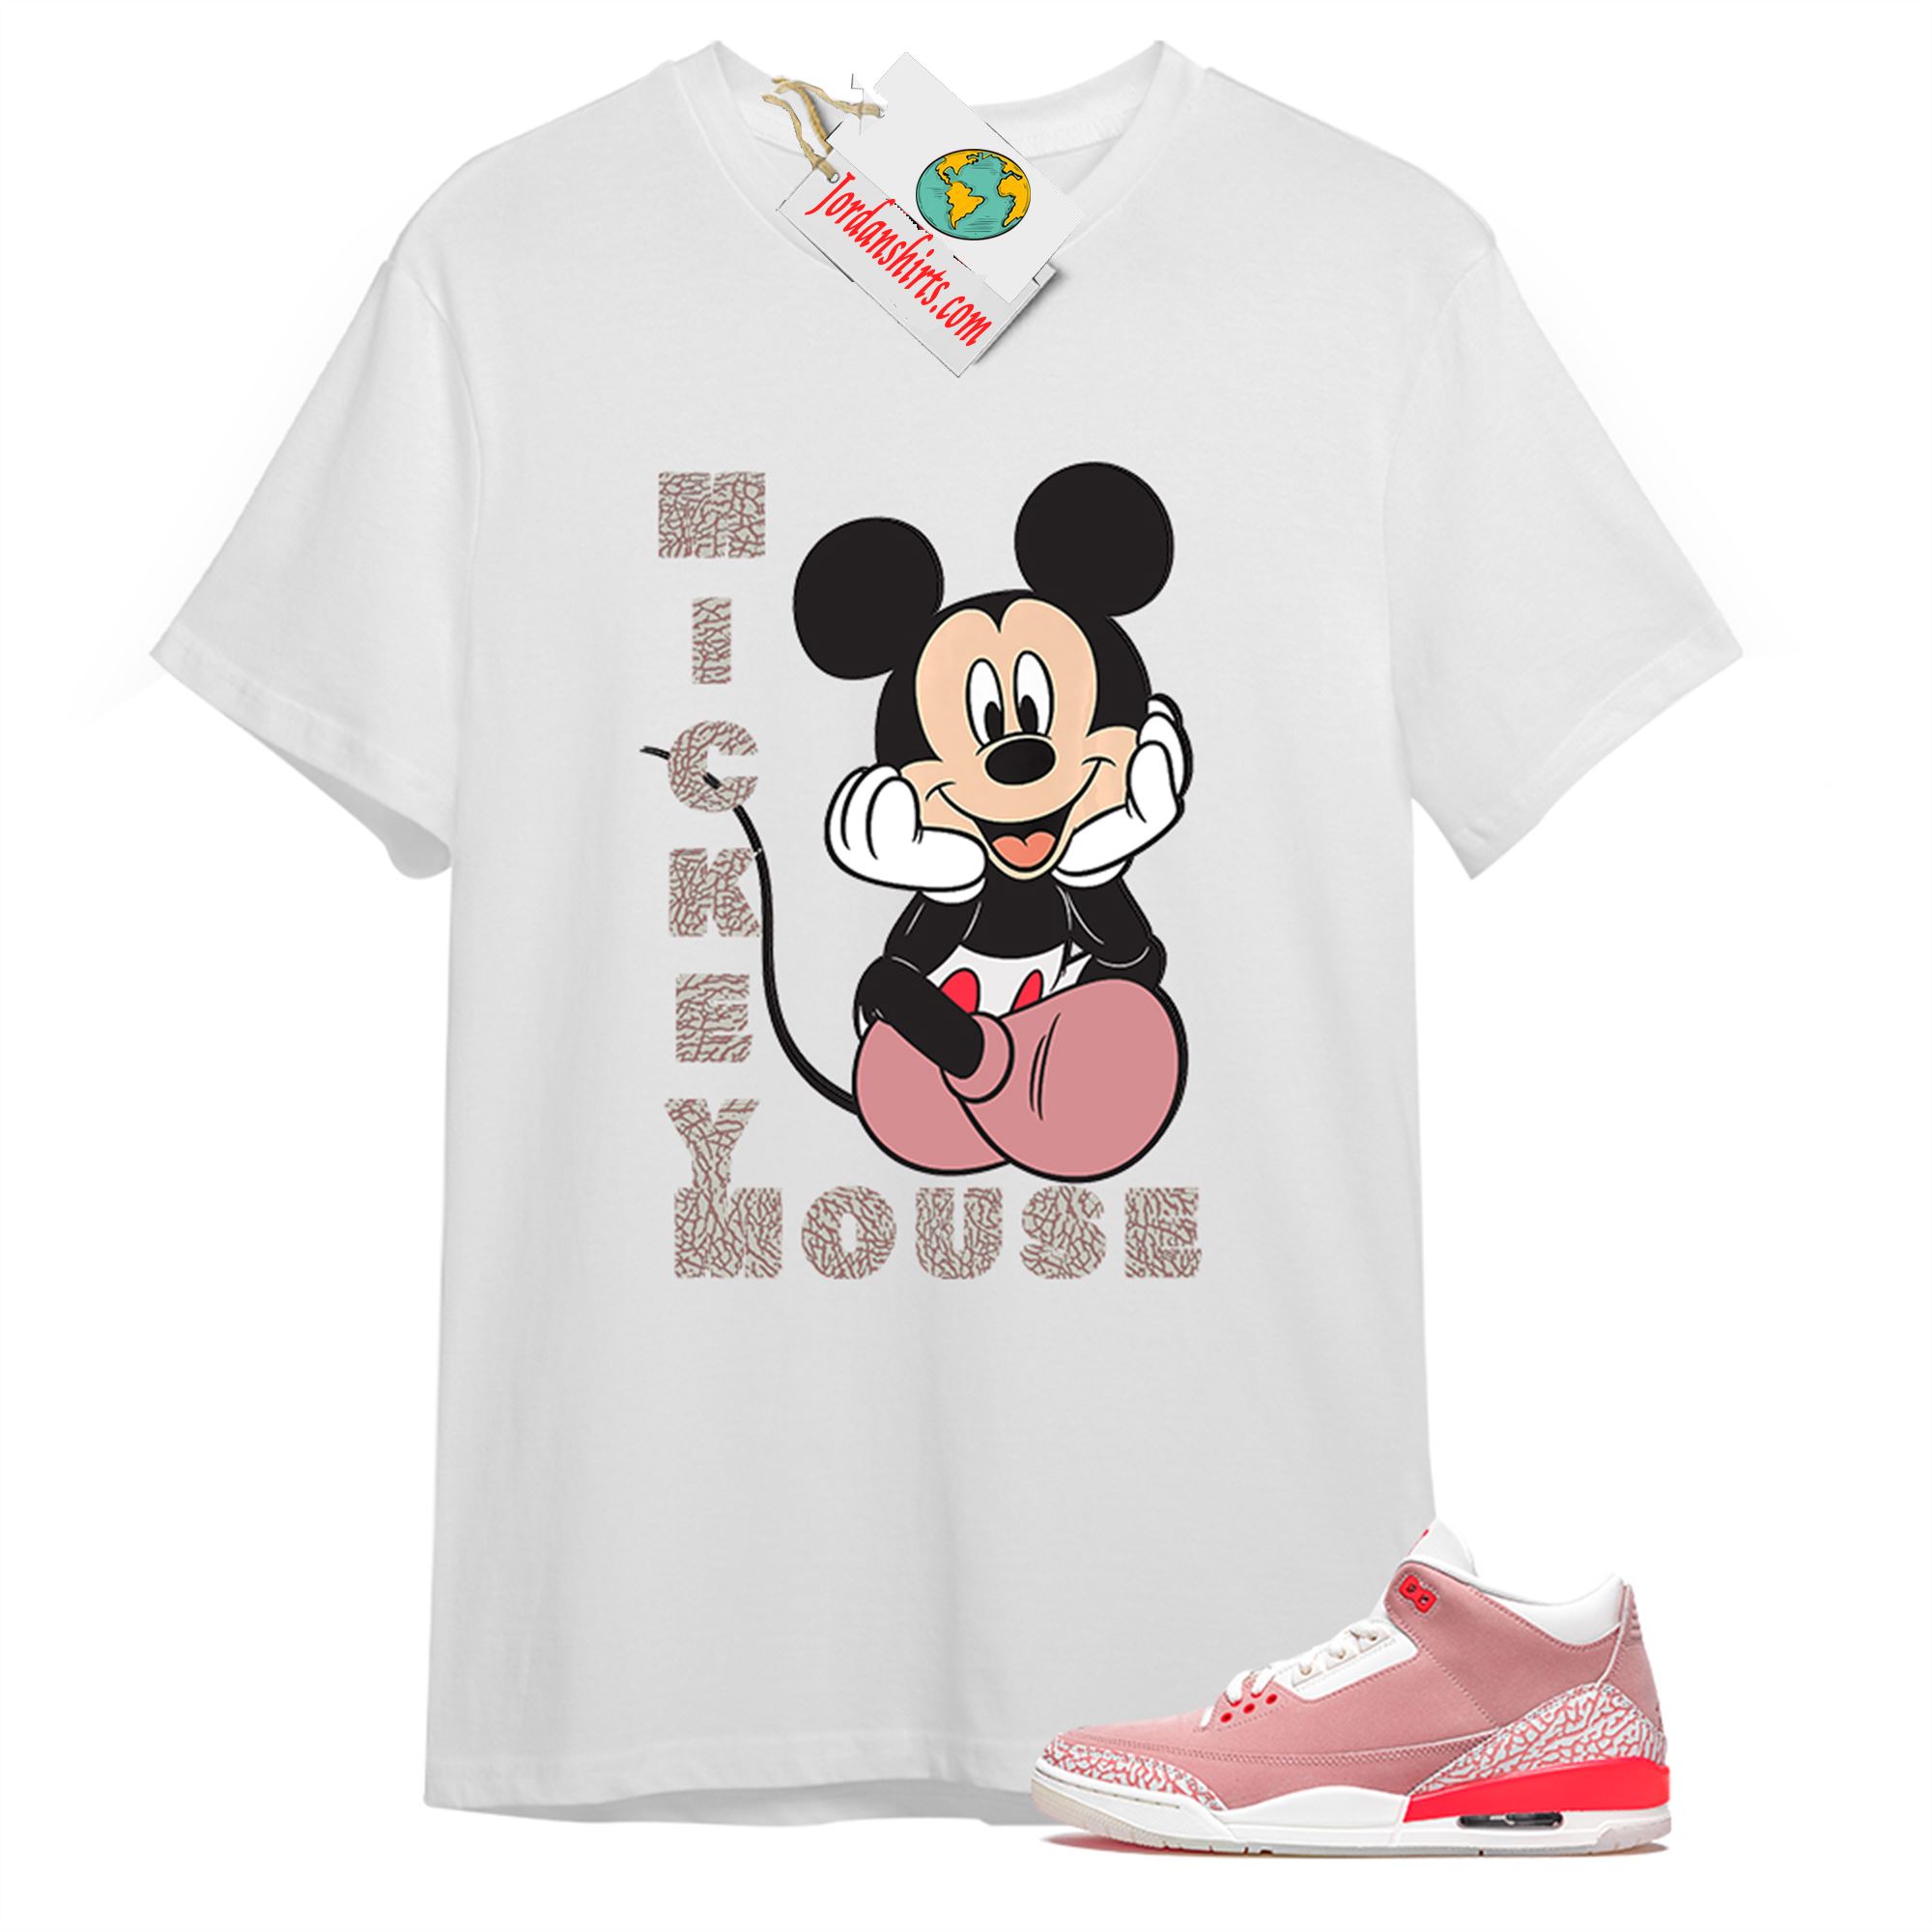 Jordan 3 Shirt, Disney Mickey Mouse Hands In Face White T-shirt Air Jordan 3 Rust Pink 3s Full Size Up To 5xl